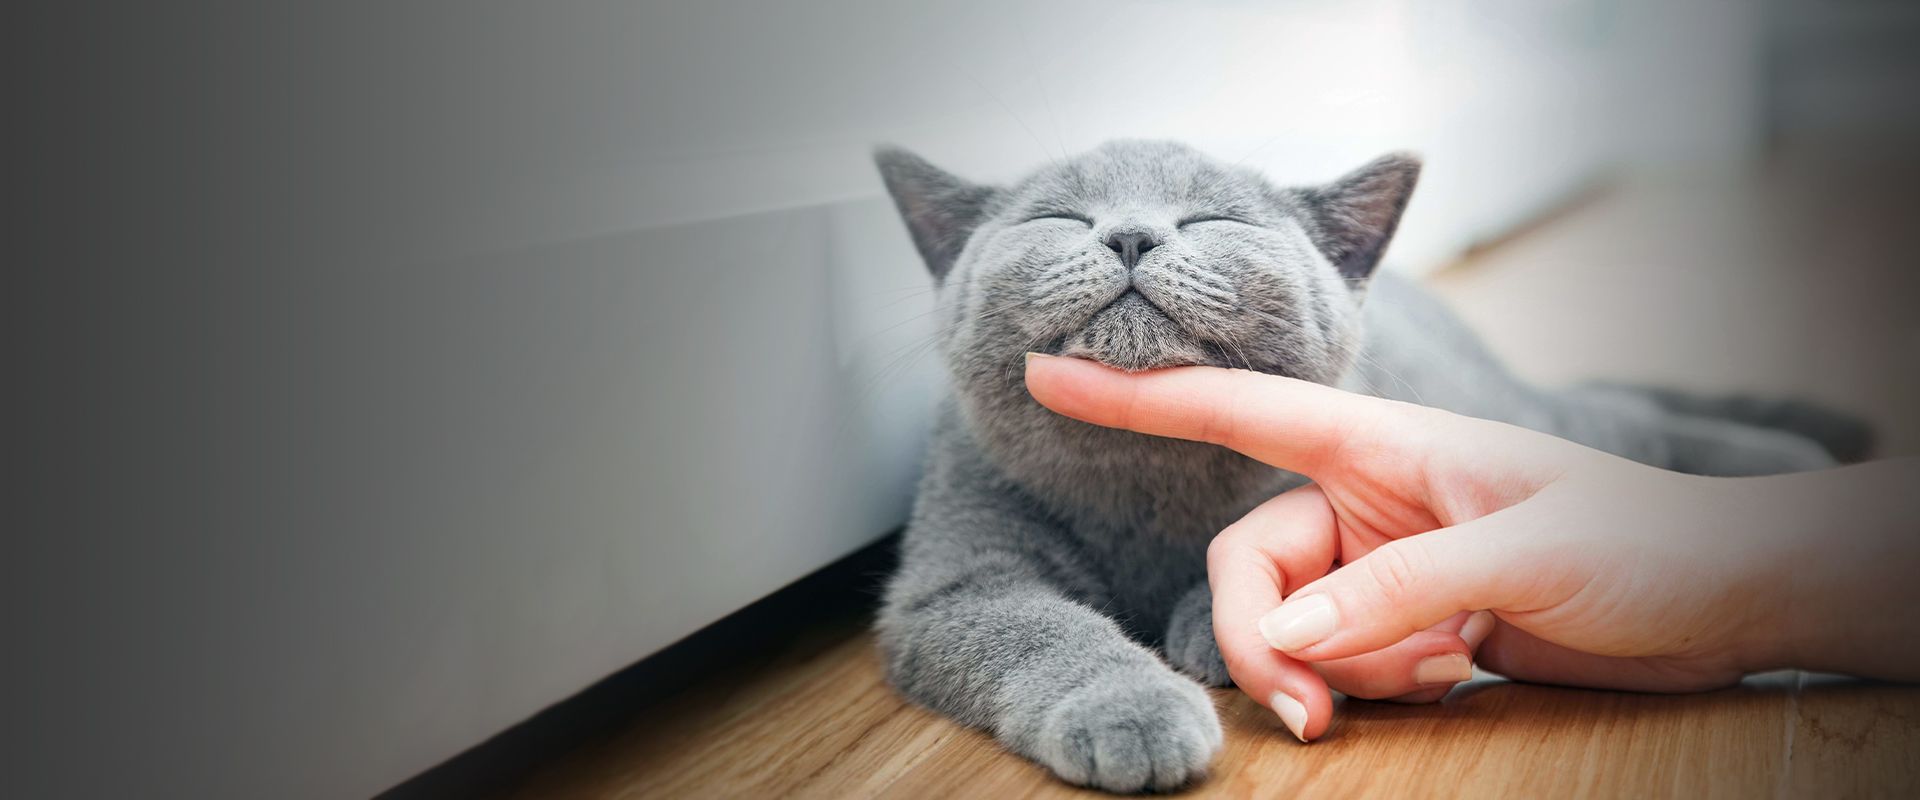 woman's hands petting gray cat